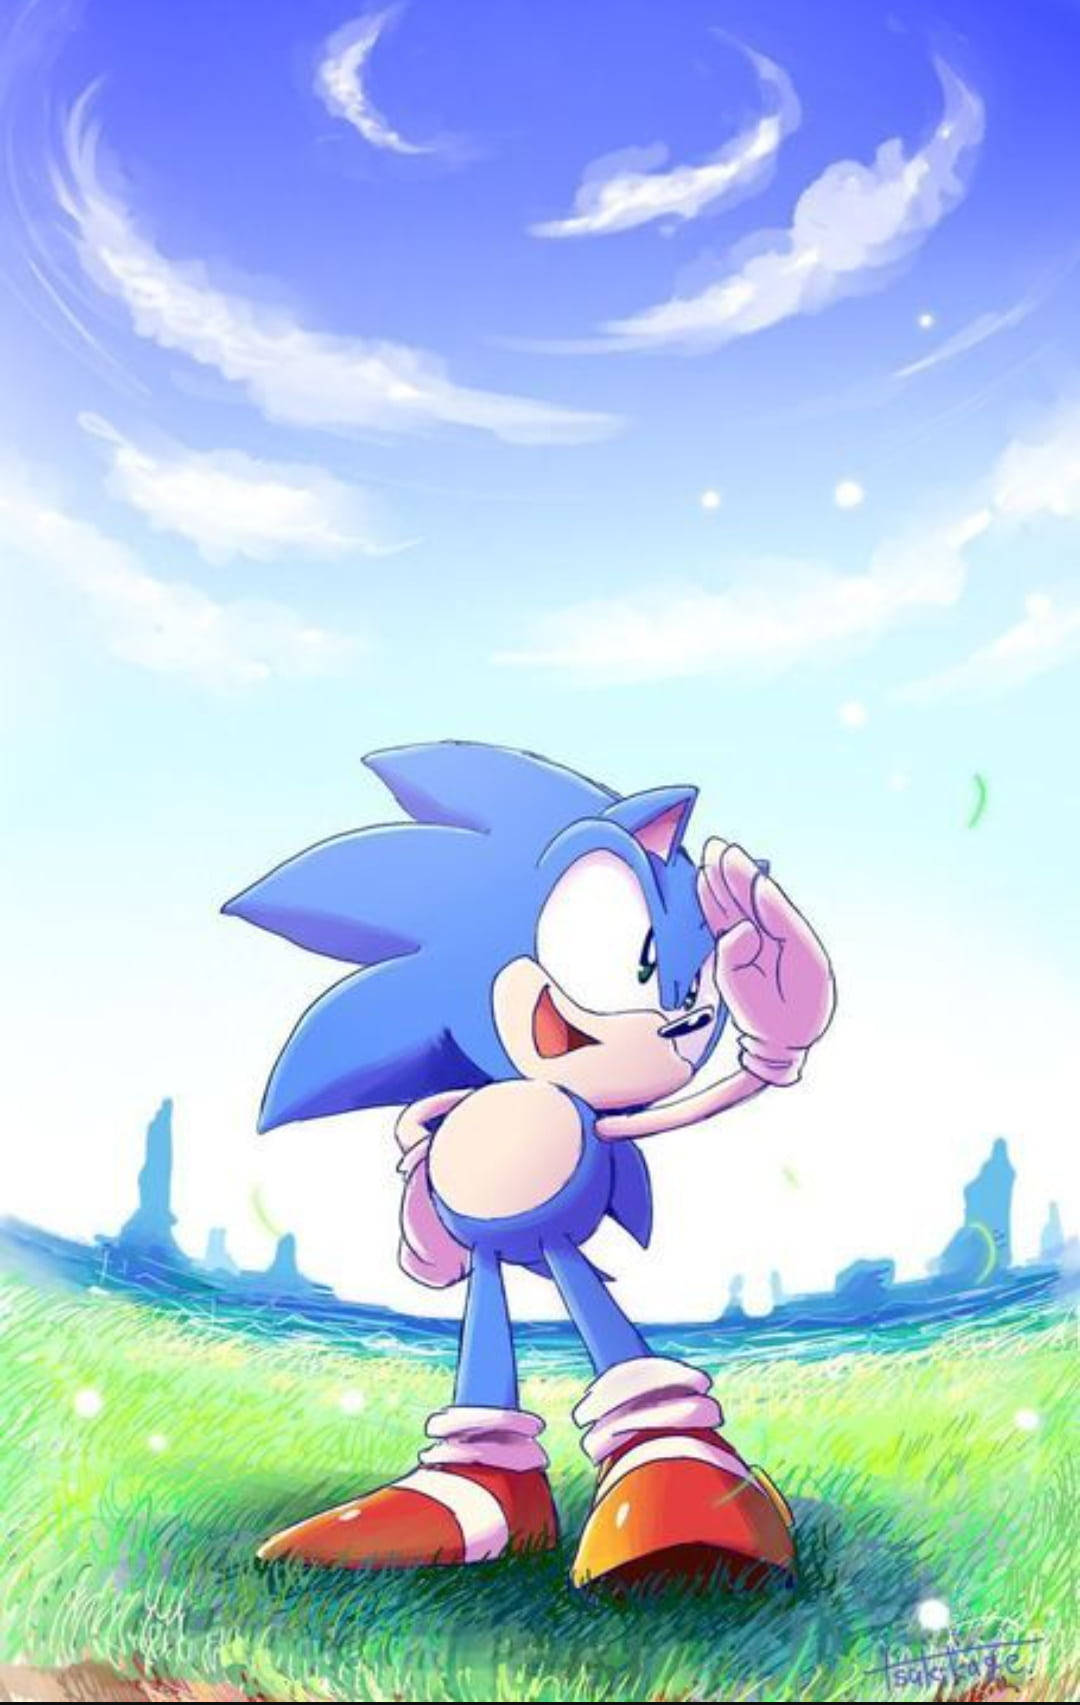 Sonic The Hedgehog In Joyful Acceleration